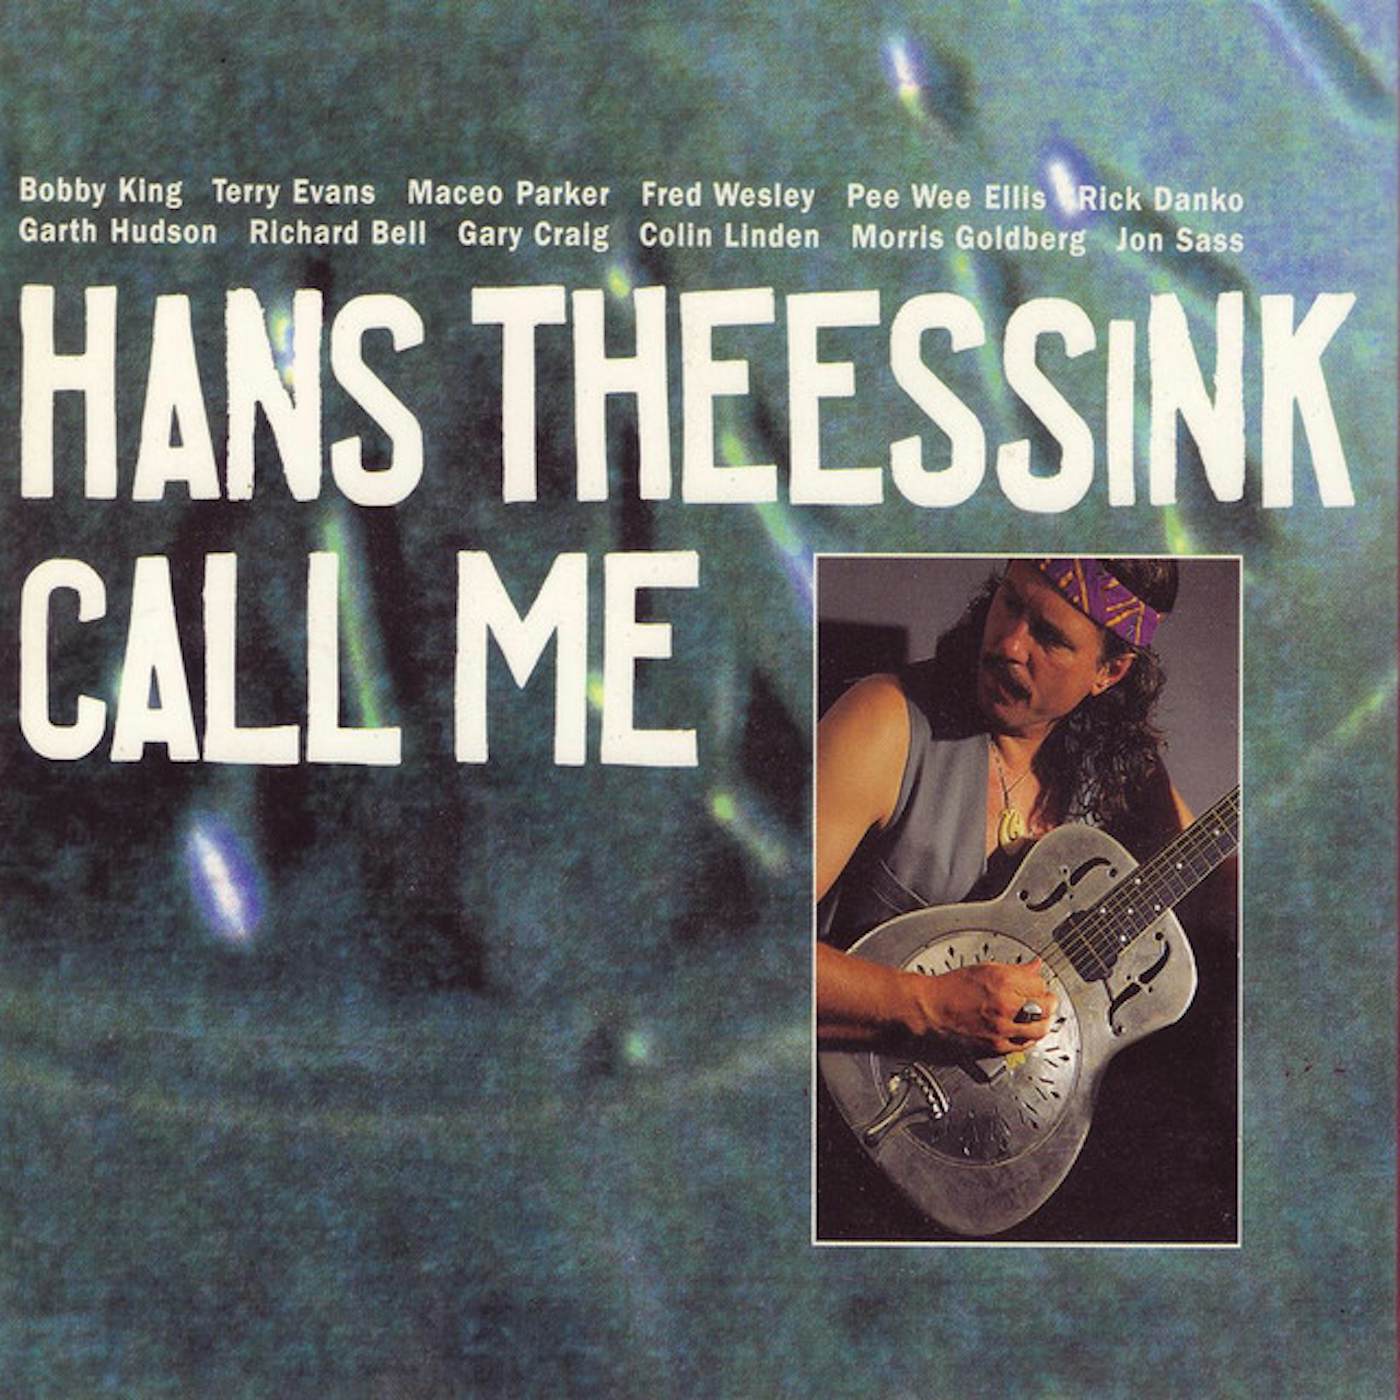 Hans Theessink Call Me Vinyl Record